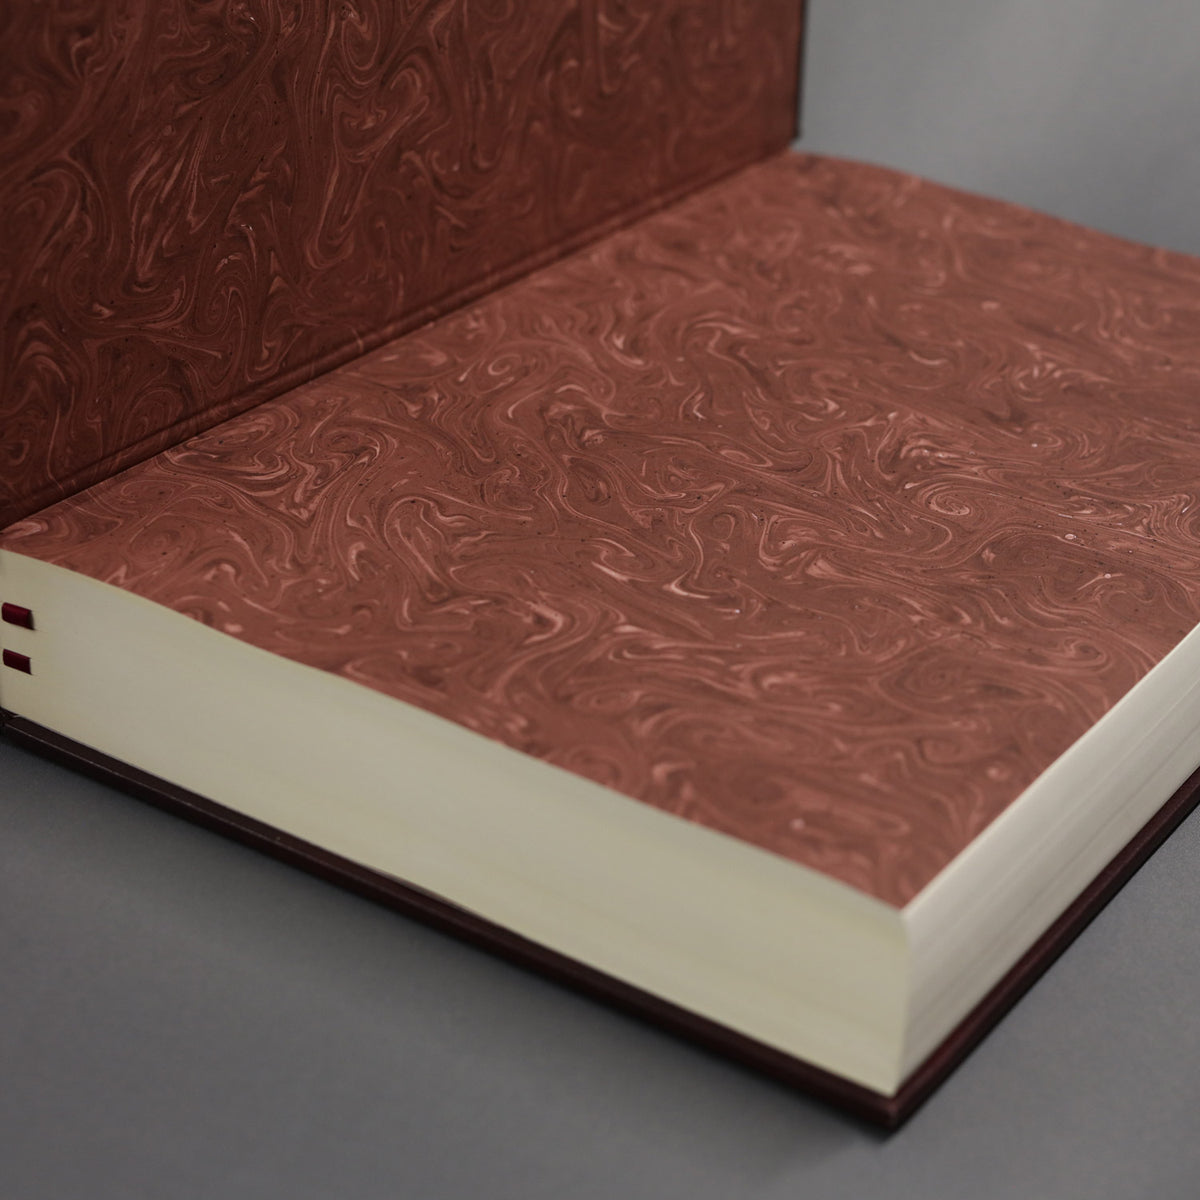 The Gutenberg Bible - 1455 Insel Verlag Edition Facsimile 2-Volume Set Carroll Revelation Vino (Burgundy) Leather